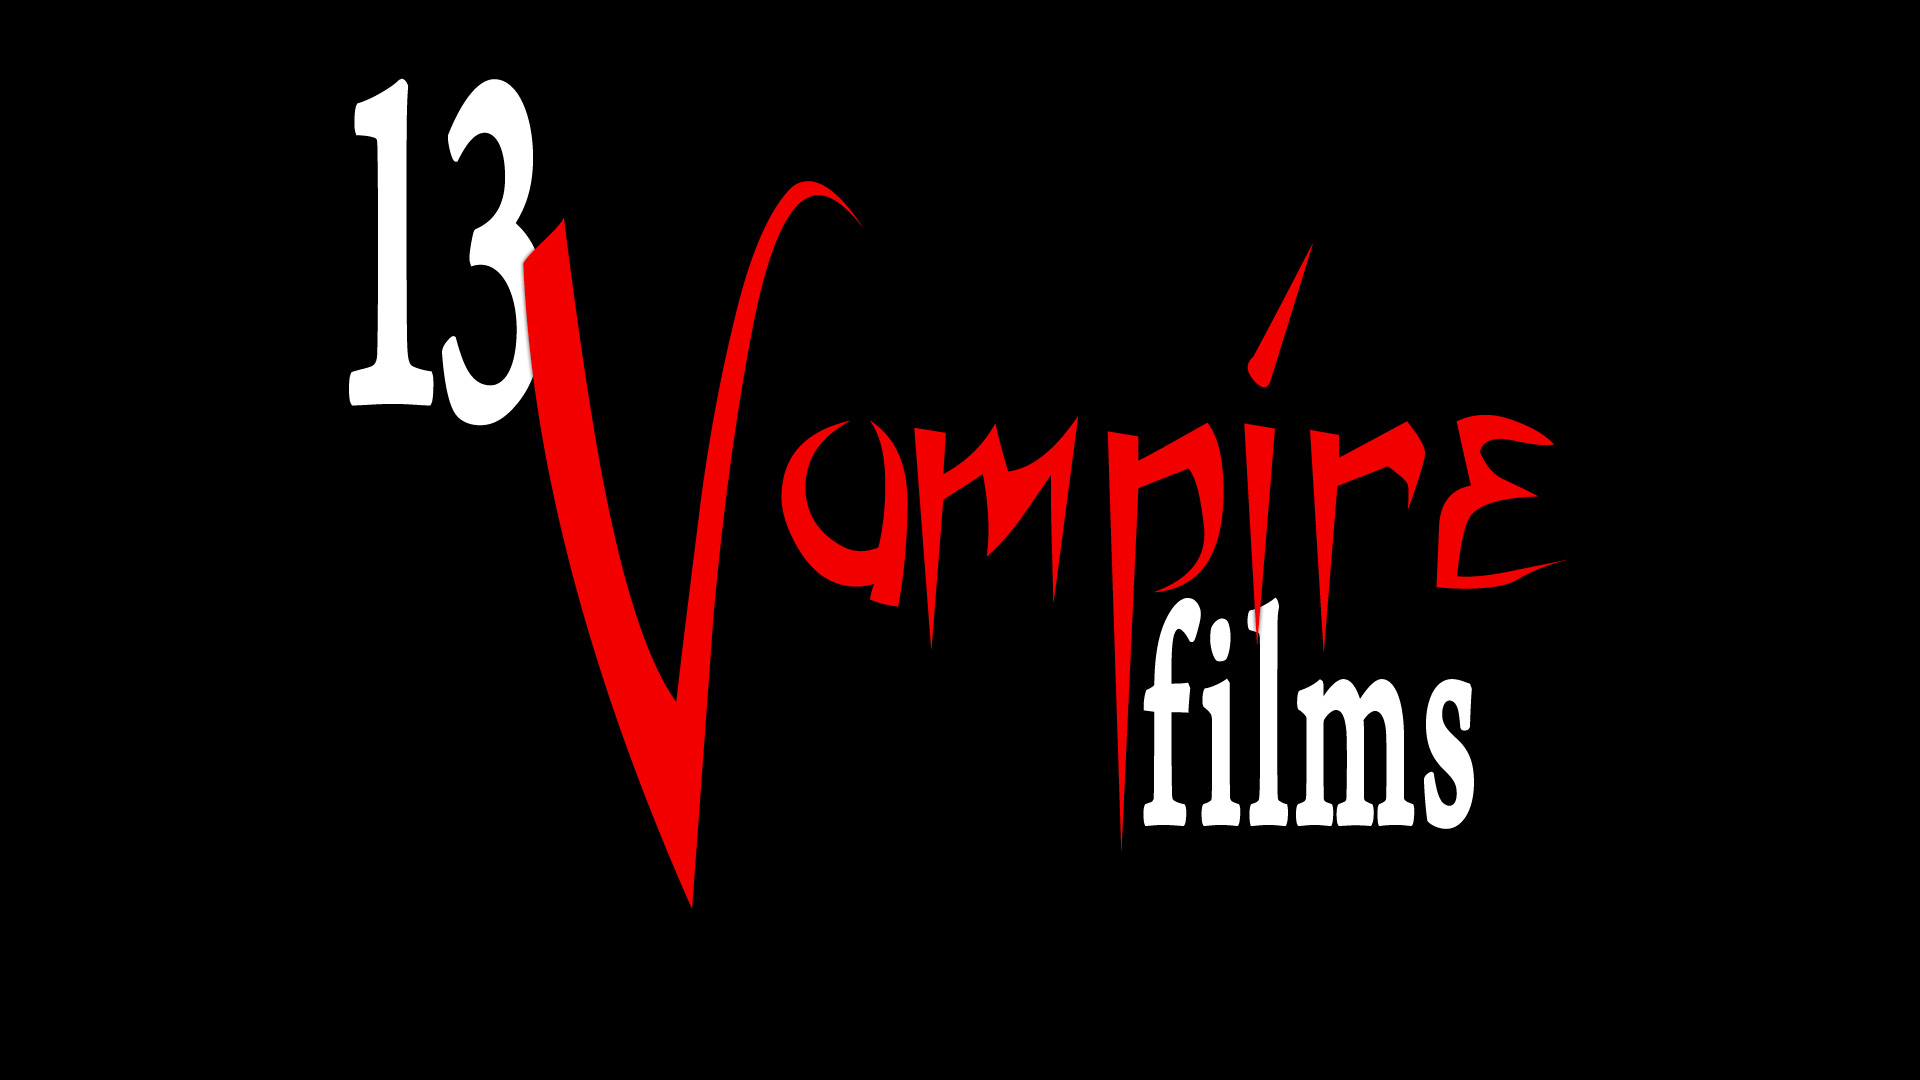 13 Vampires